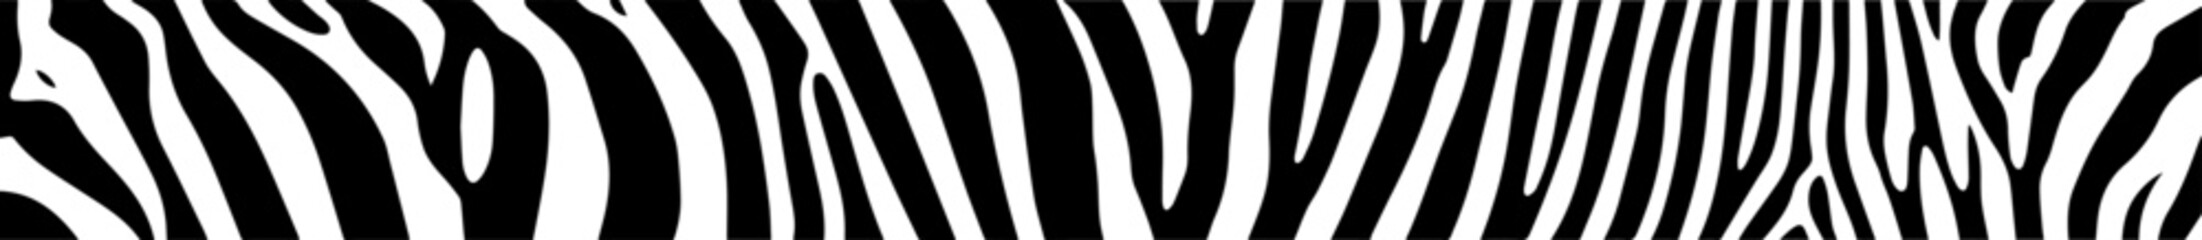 Sticker - zebra stripes black pattern silhouette overlay vector, shape print, monochrome clipart illustration, laser cutting engraving nocolor